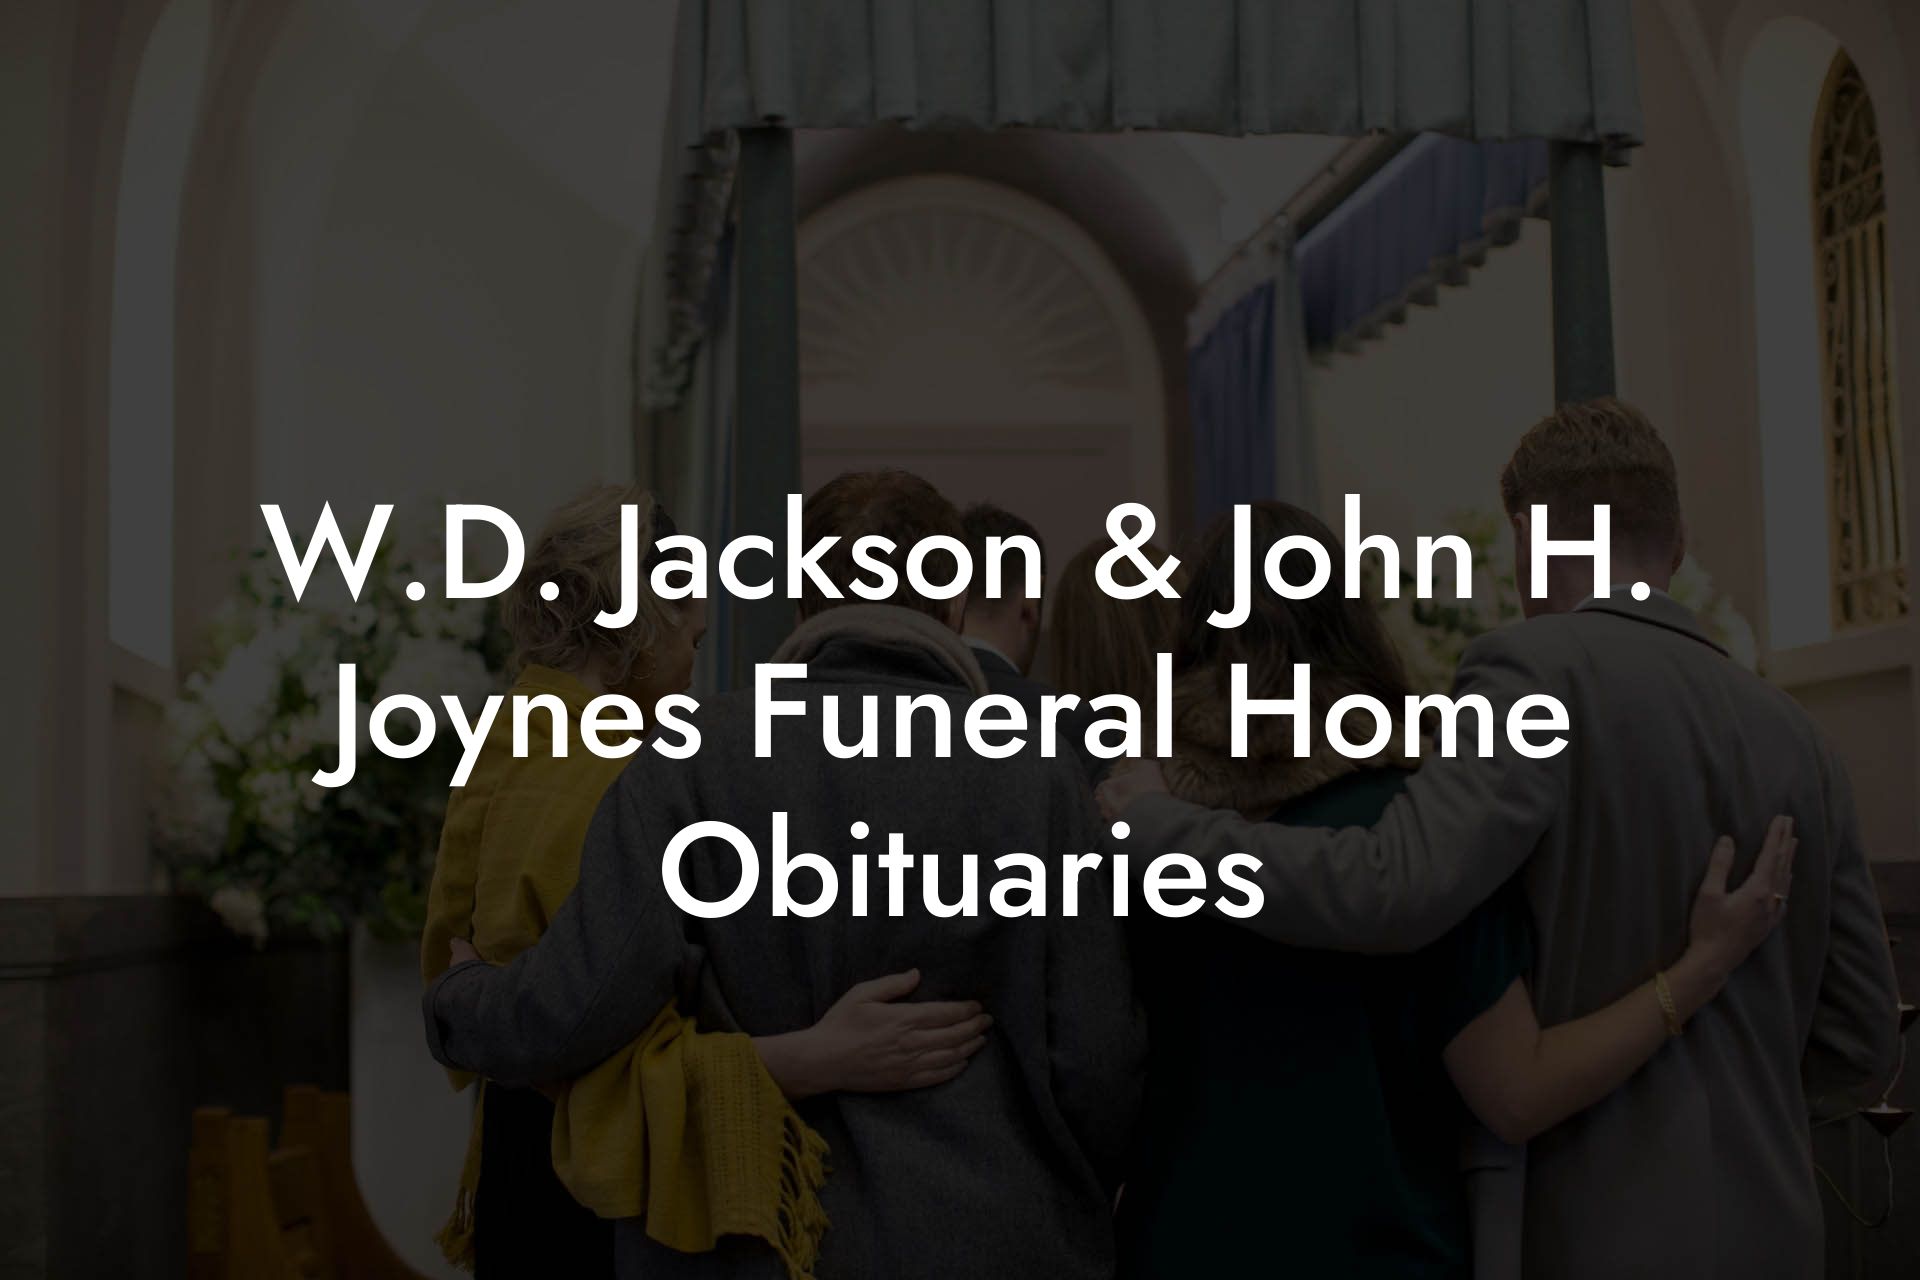 W.D. Jackson & John H. Joynes Funeral Home Obituaries